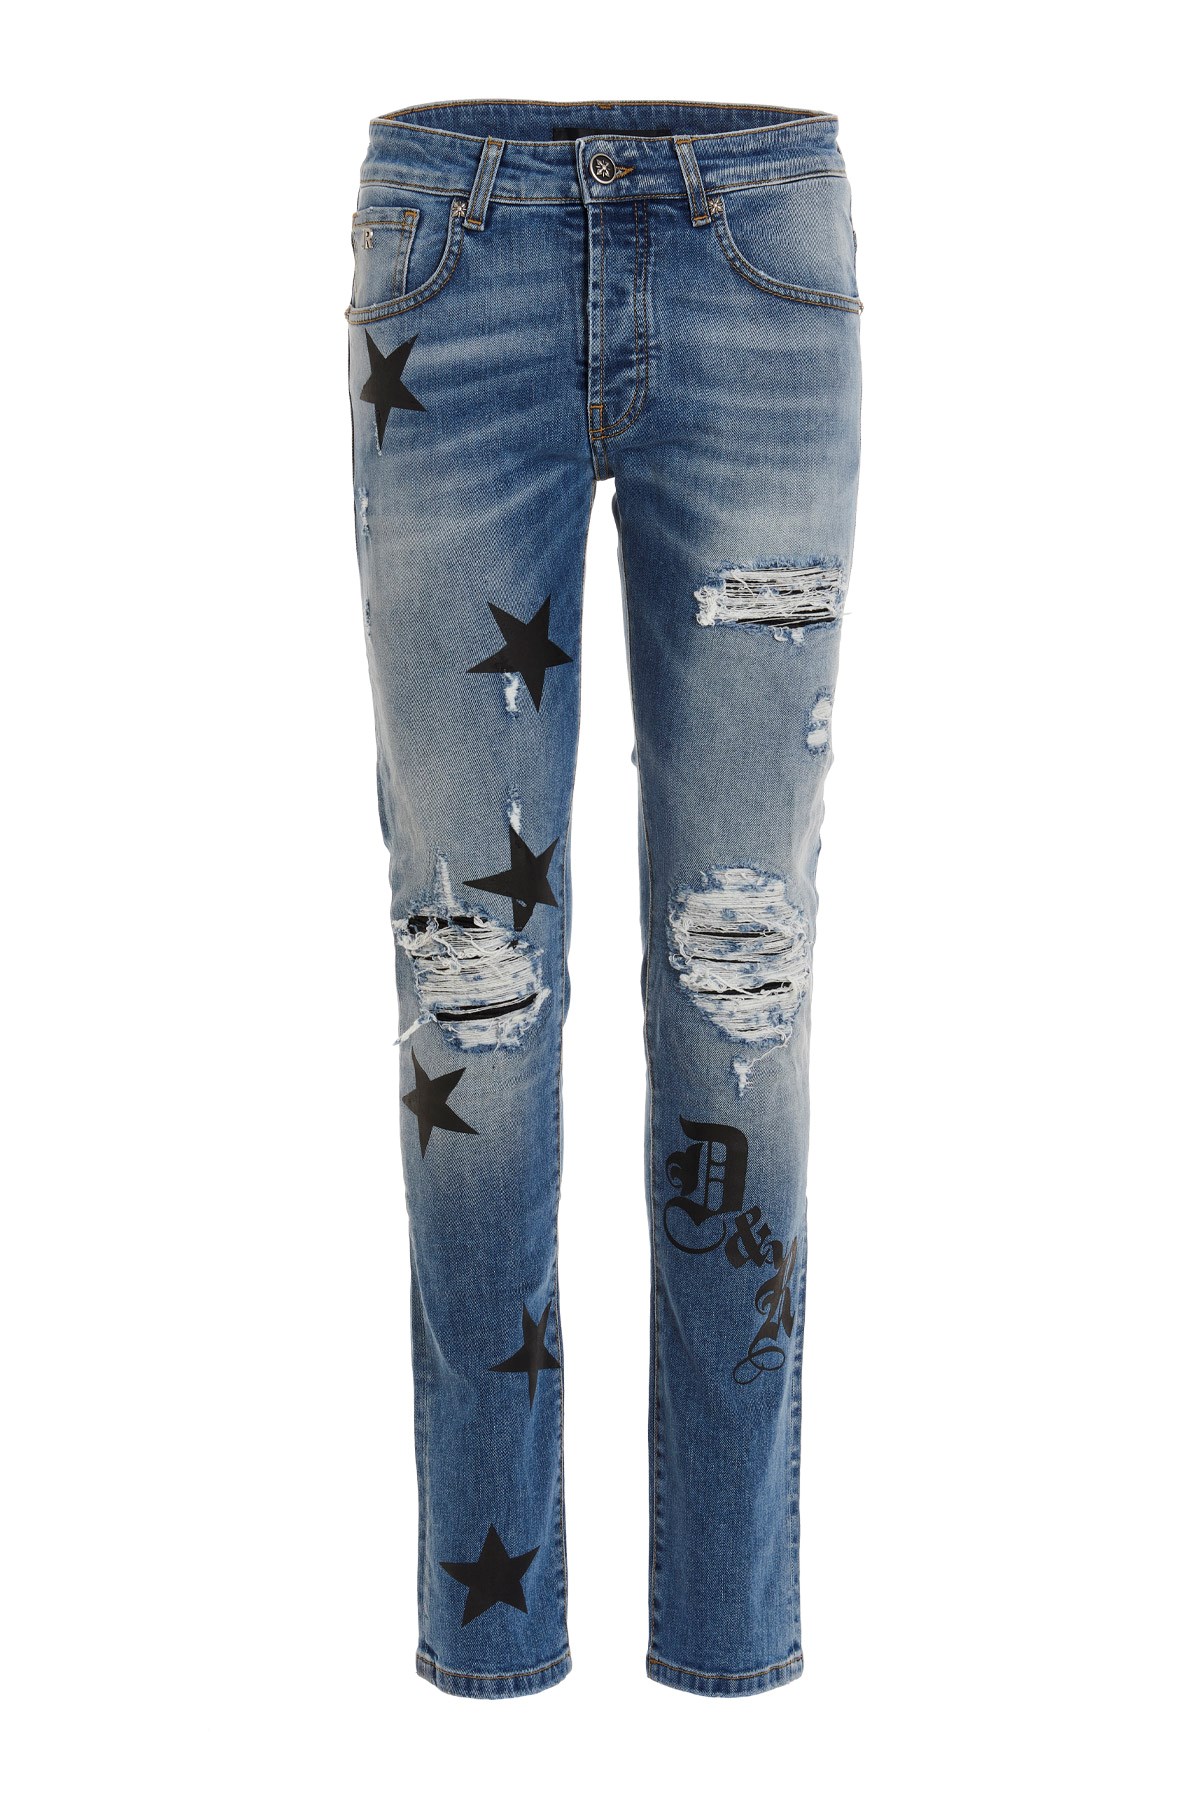 RICHMOND Richmond ‘Viskit’ Jeans, Dark Polo Gang Capsule